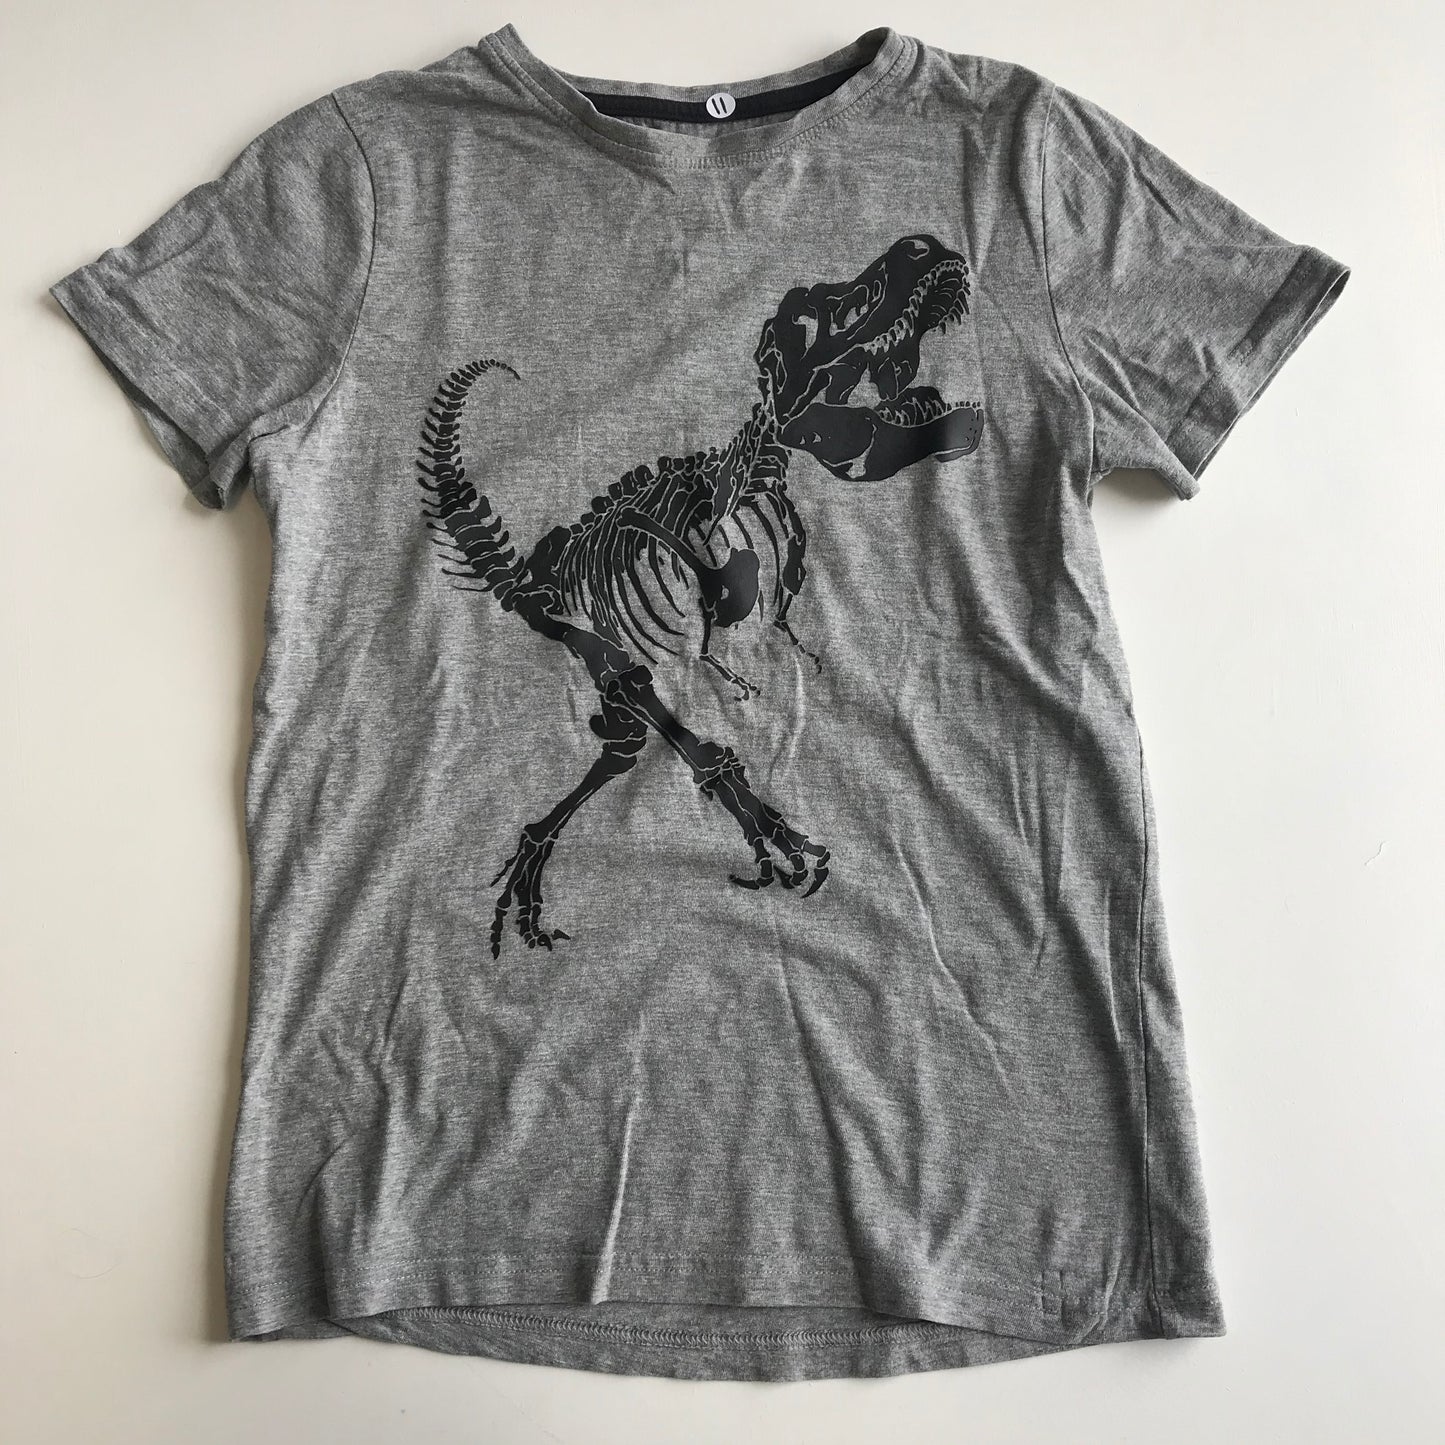 T-shirt - T-Rex - Age 11